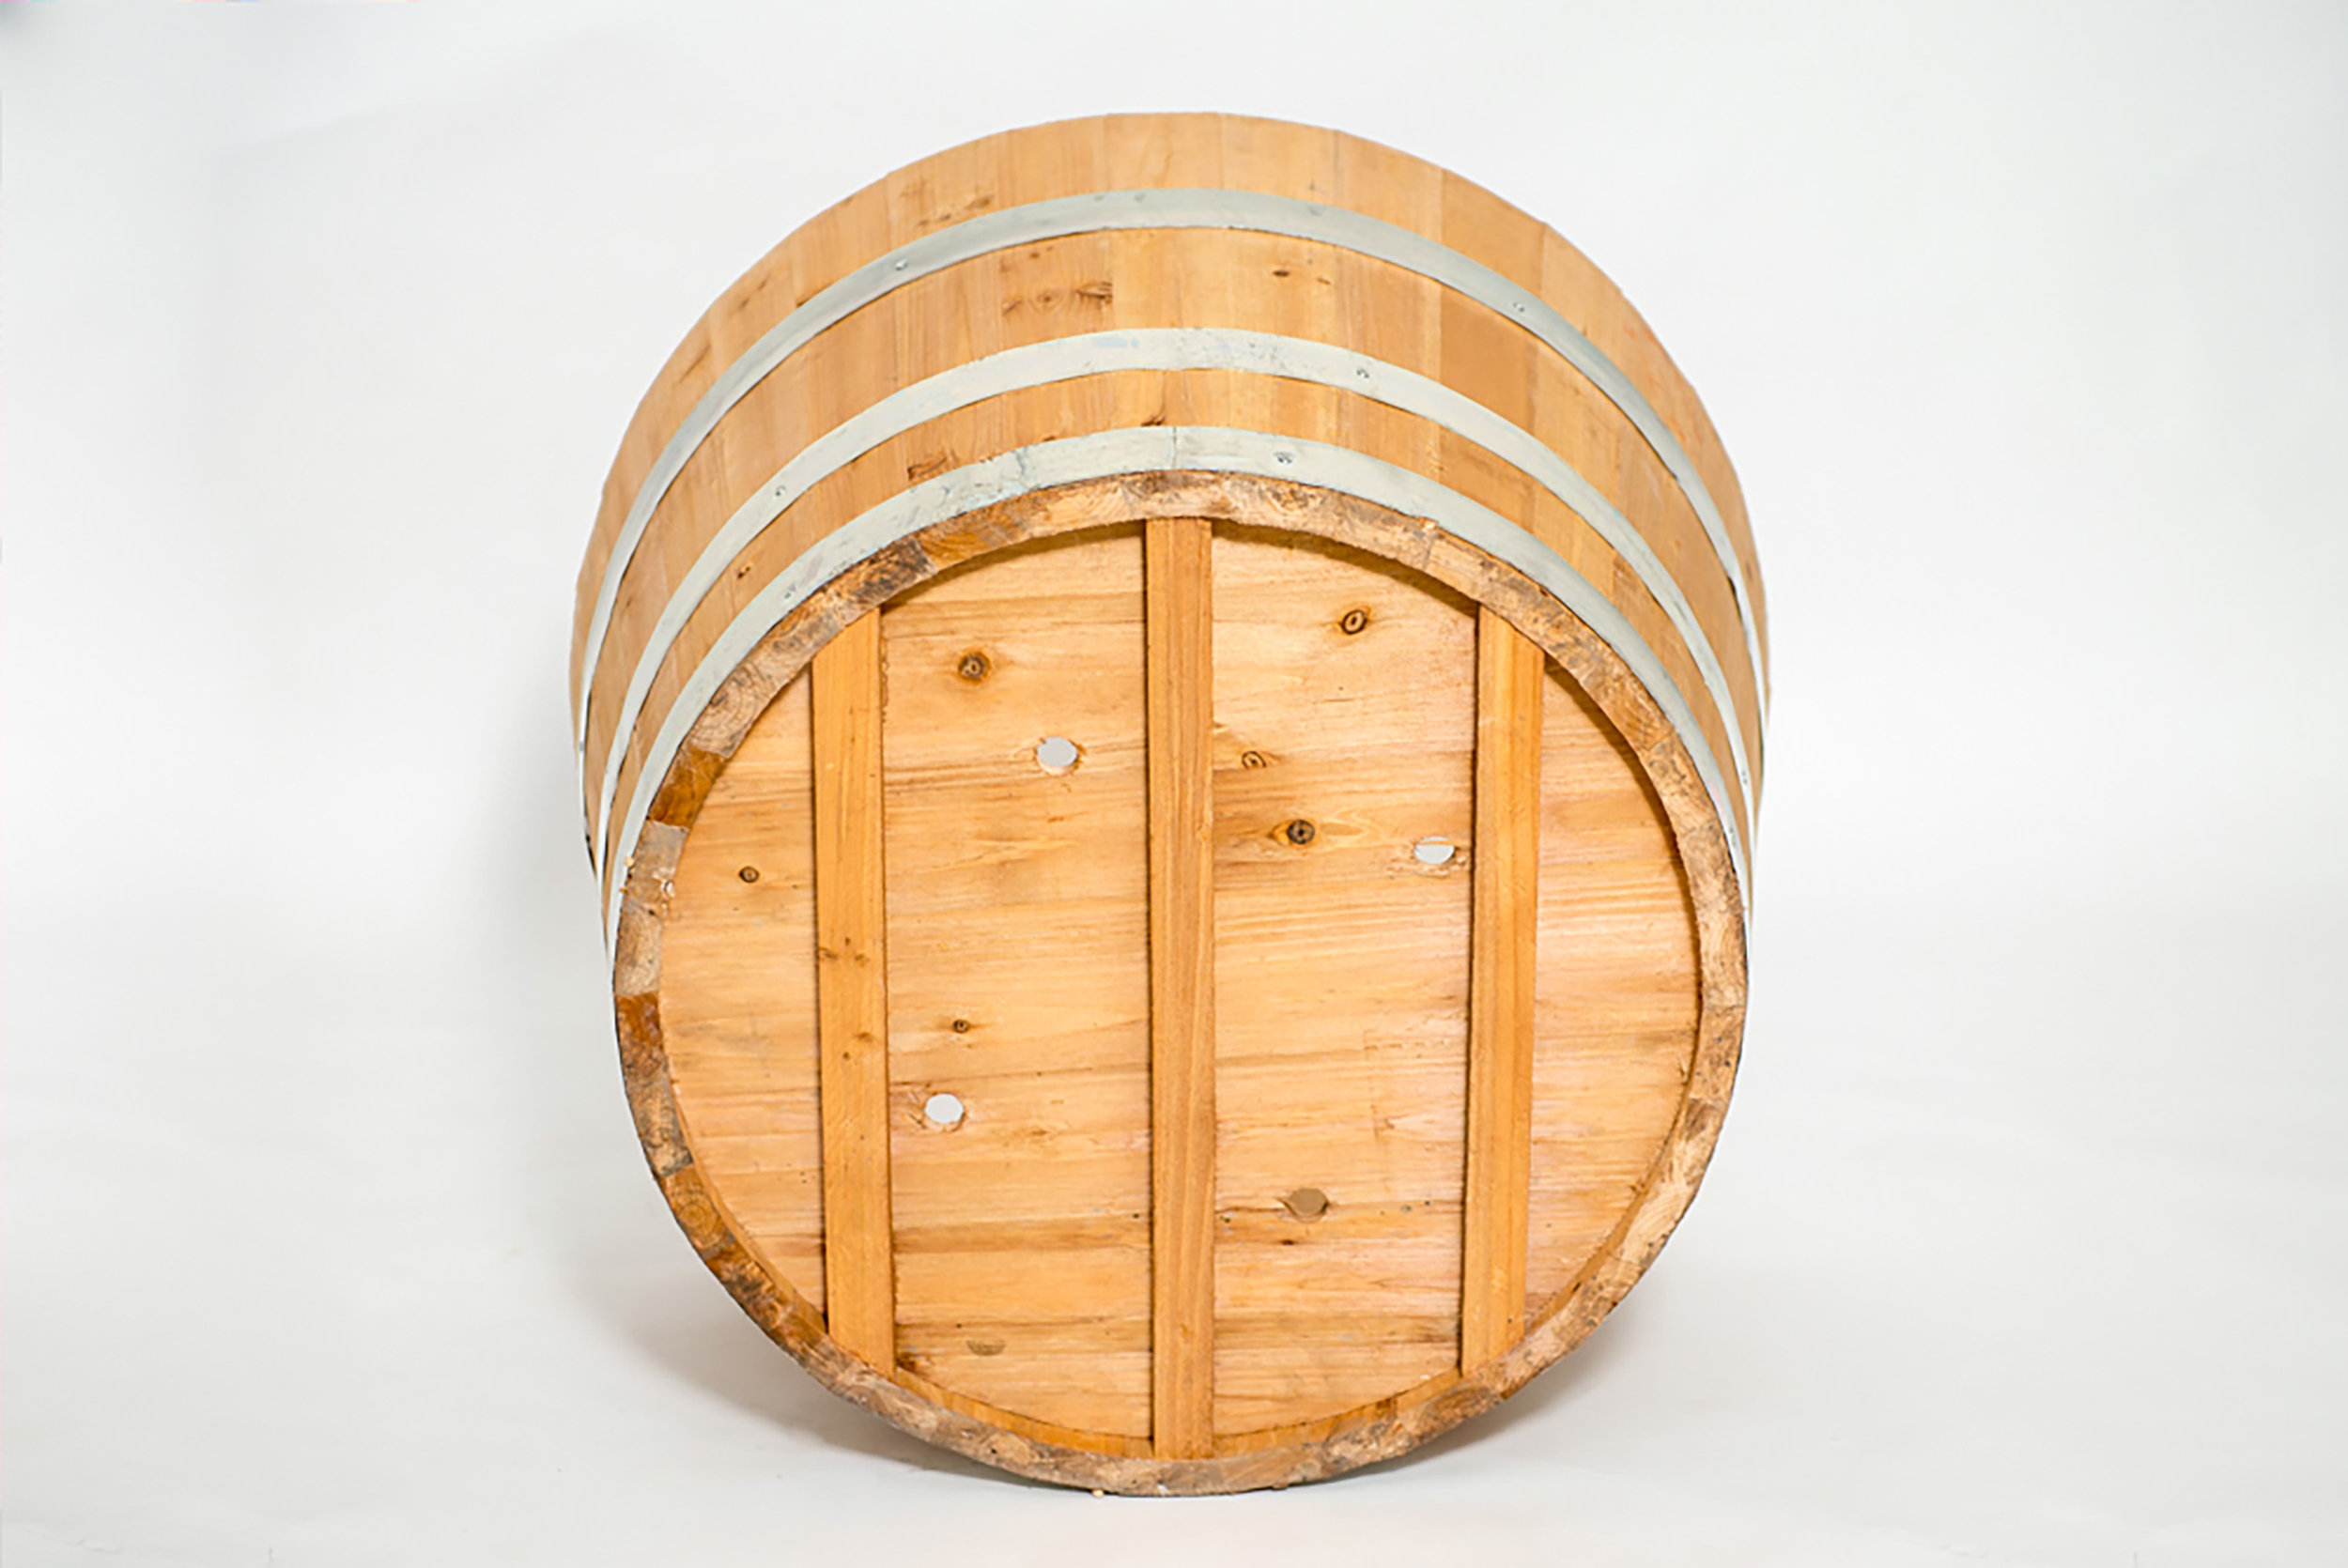  RW wine half barrel dimensions: 26”x16.5” 